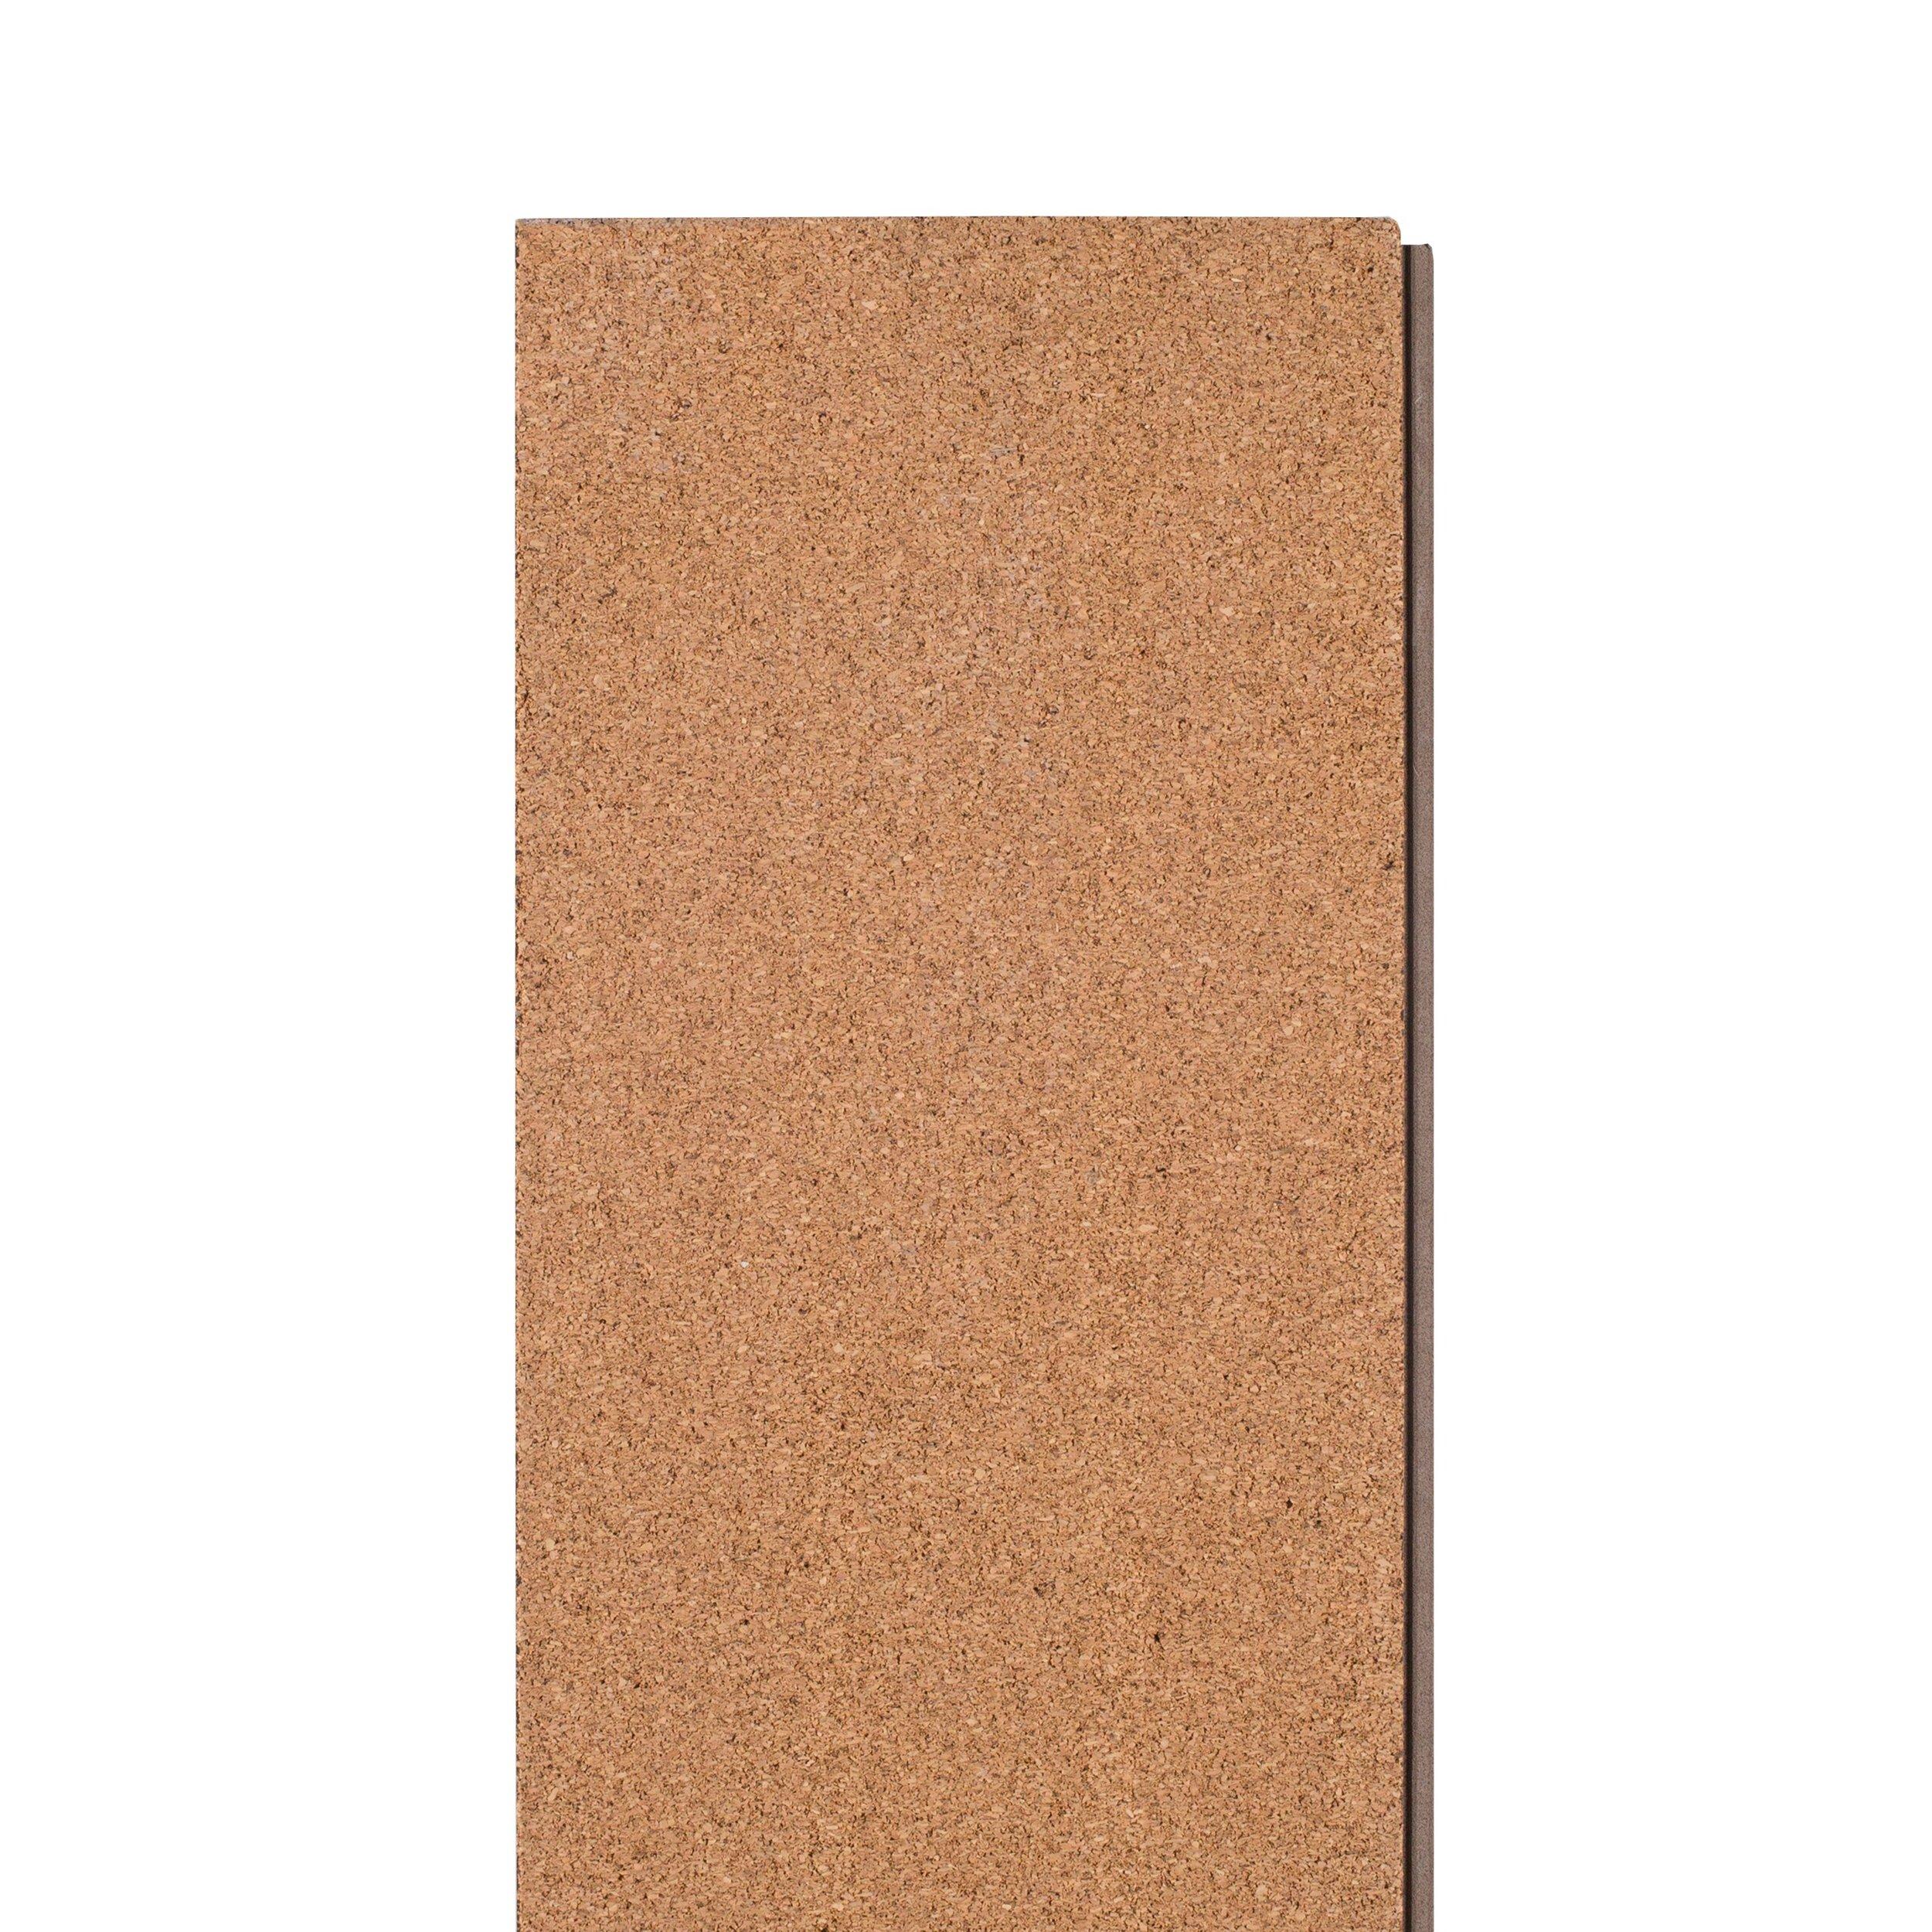 Mallard Place Rigid Core Luxury Vinyl Plank - Cork Back